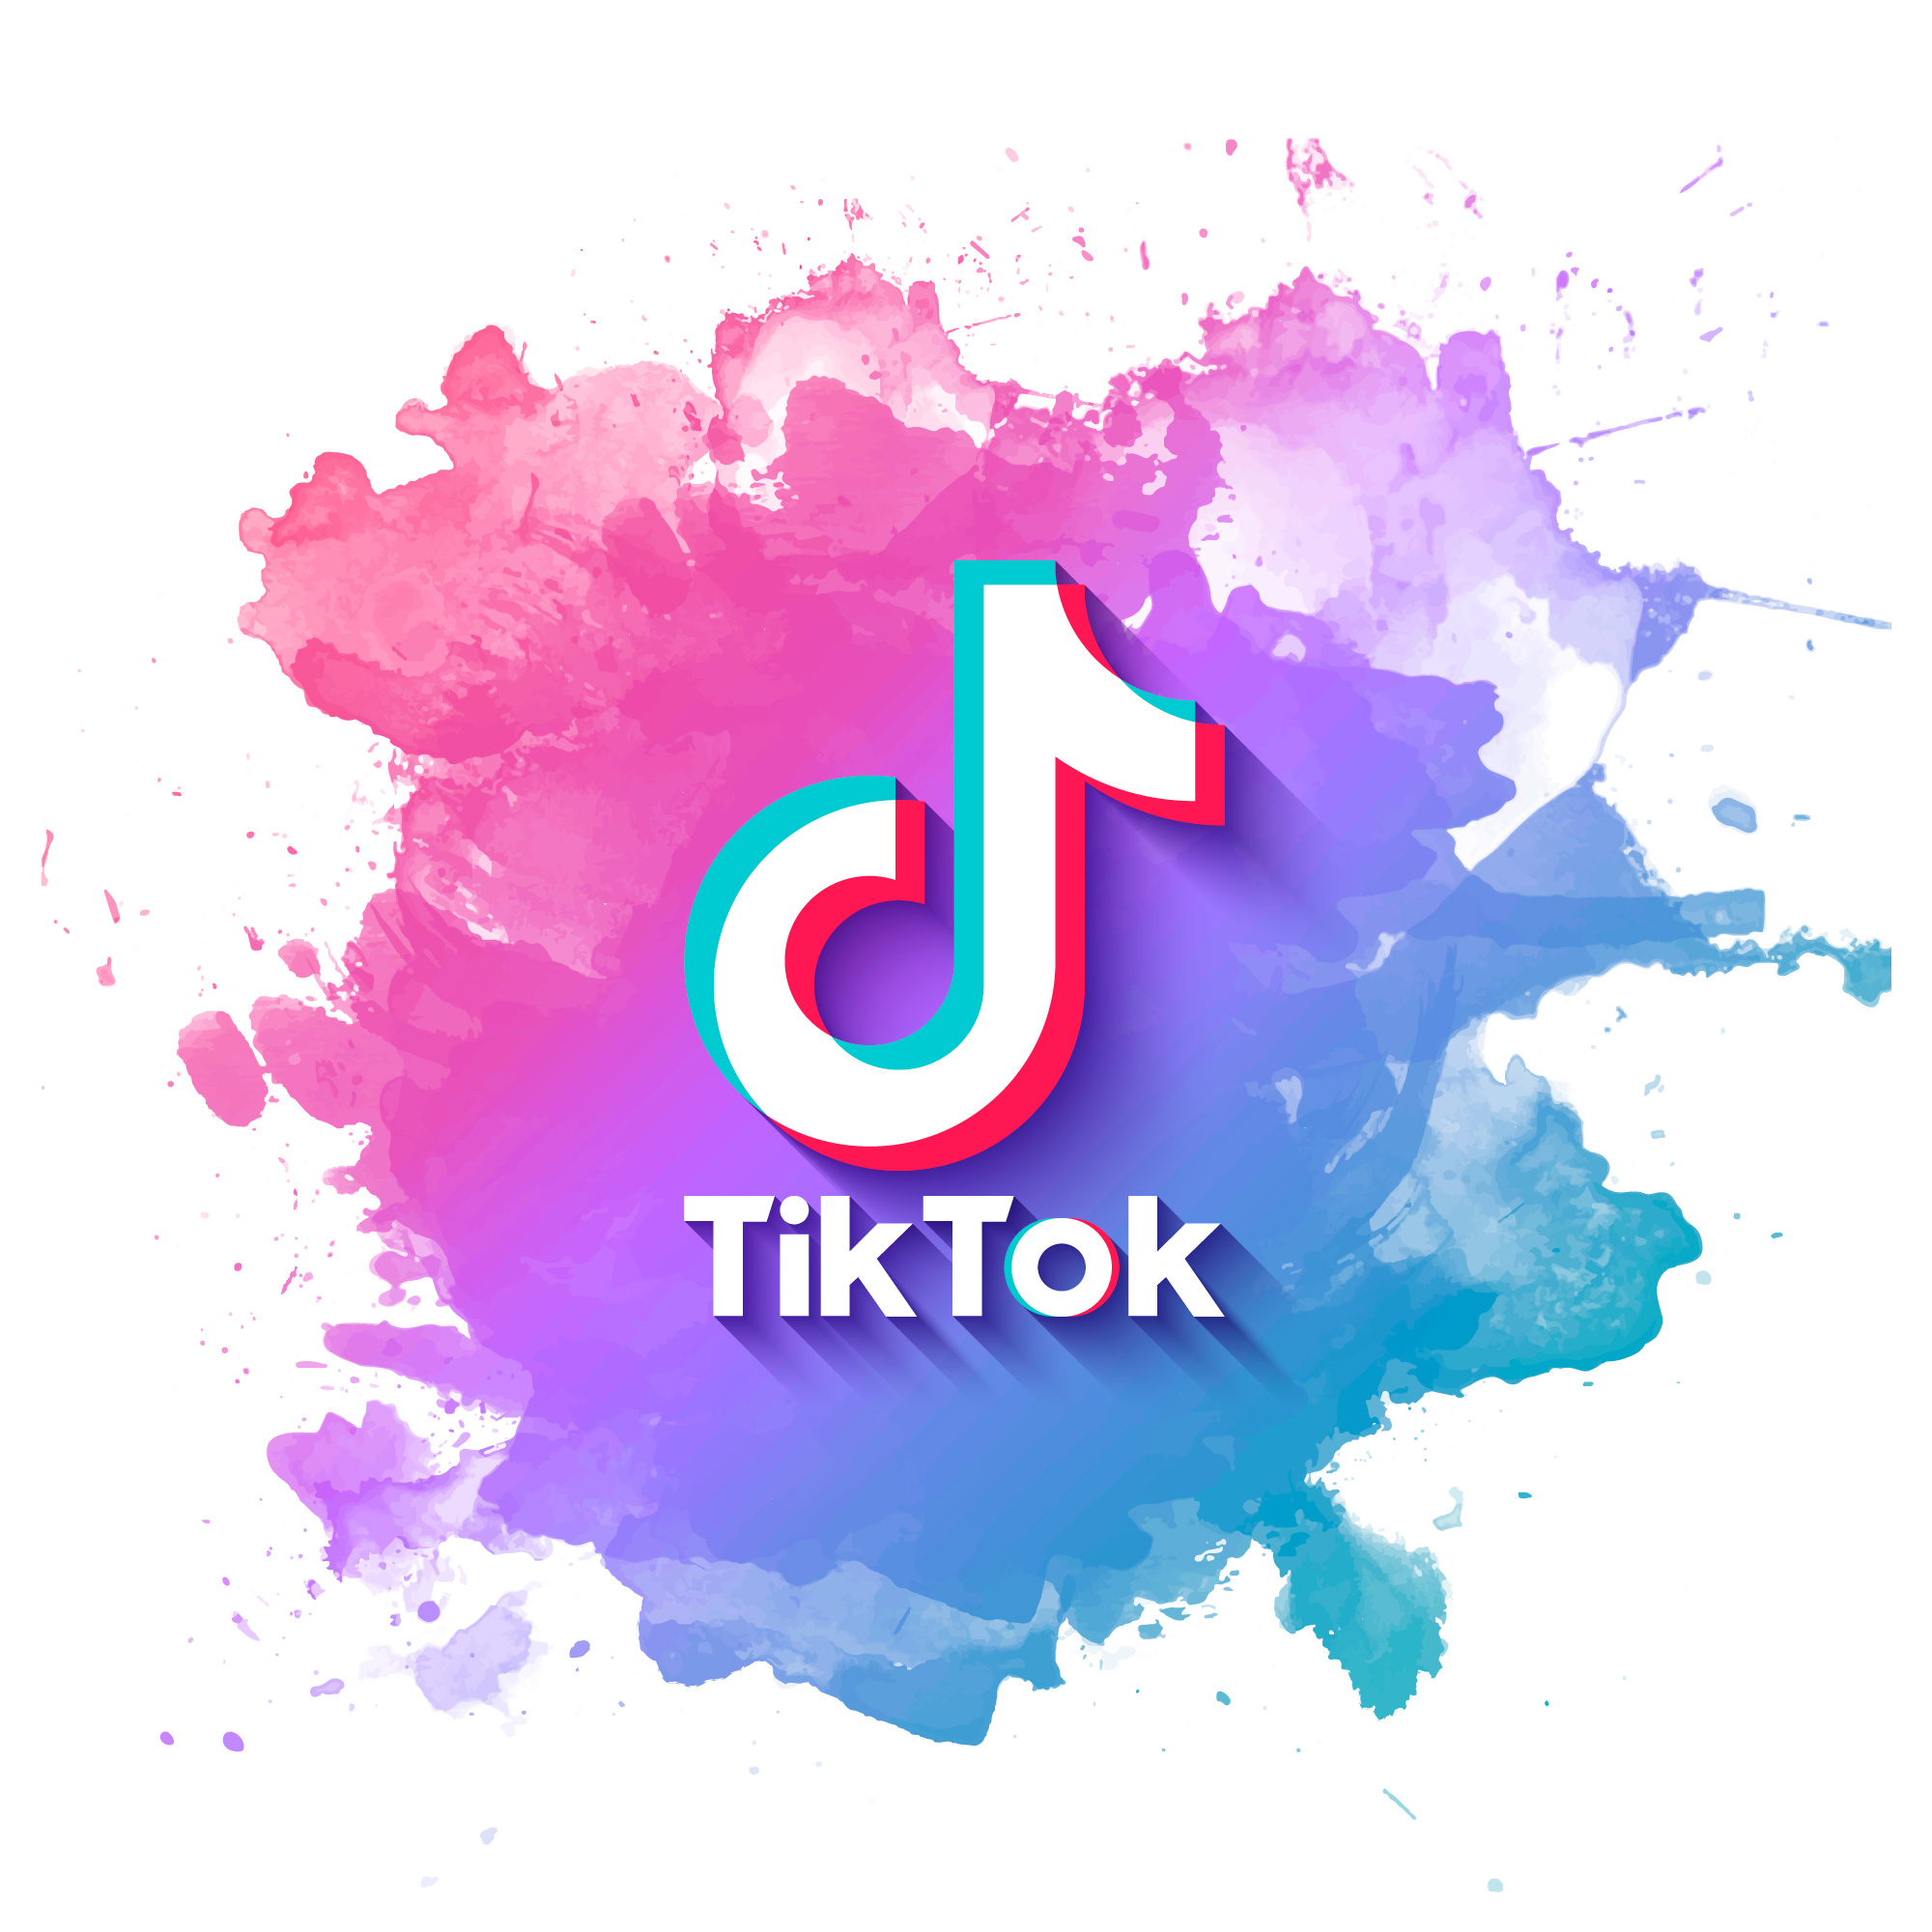 TikTok: The Magic Behind the Screen